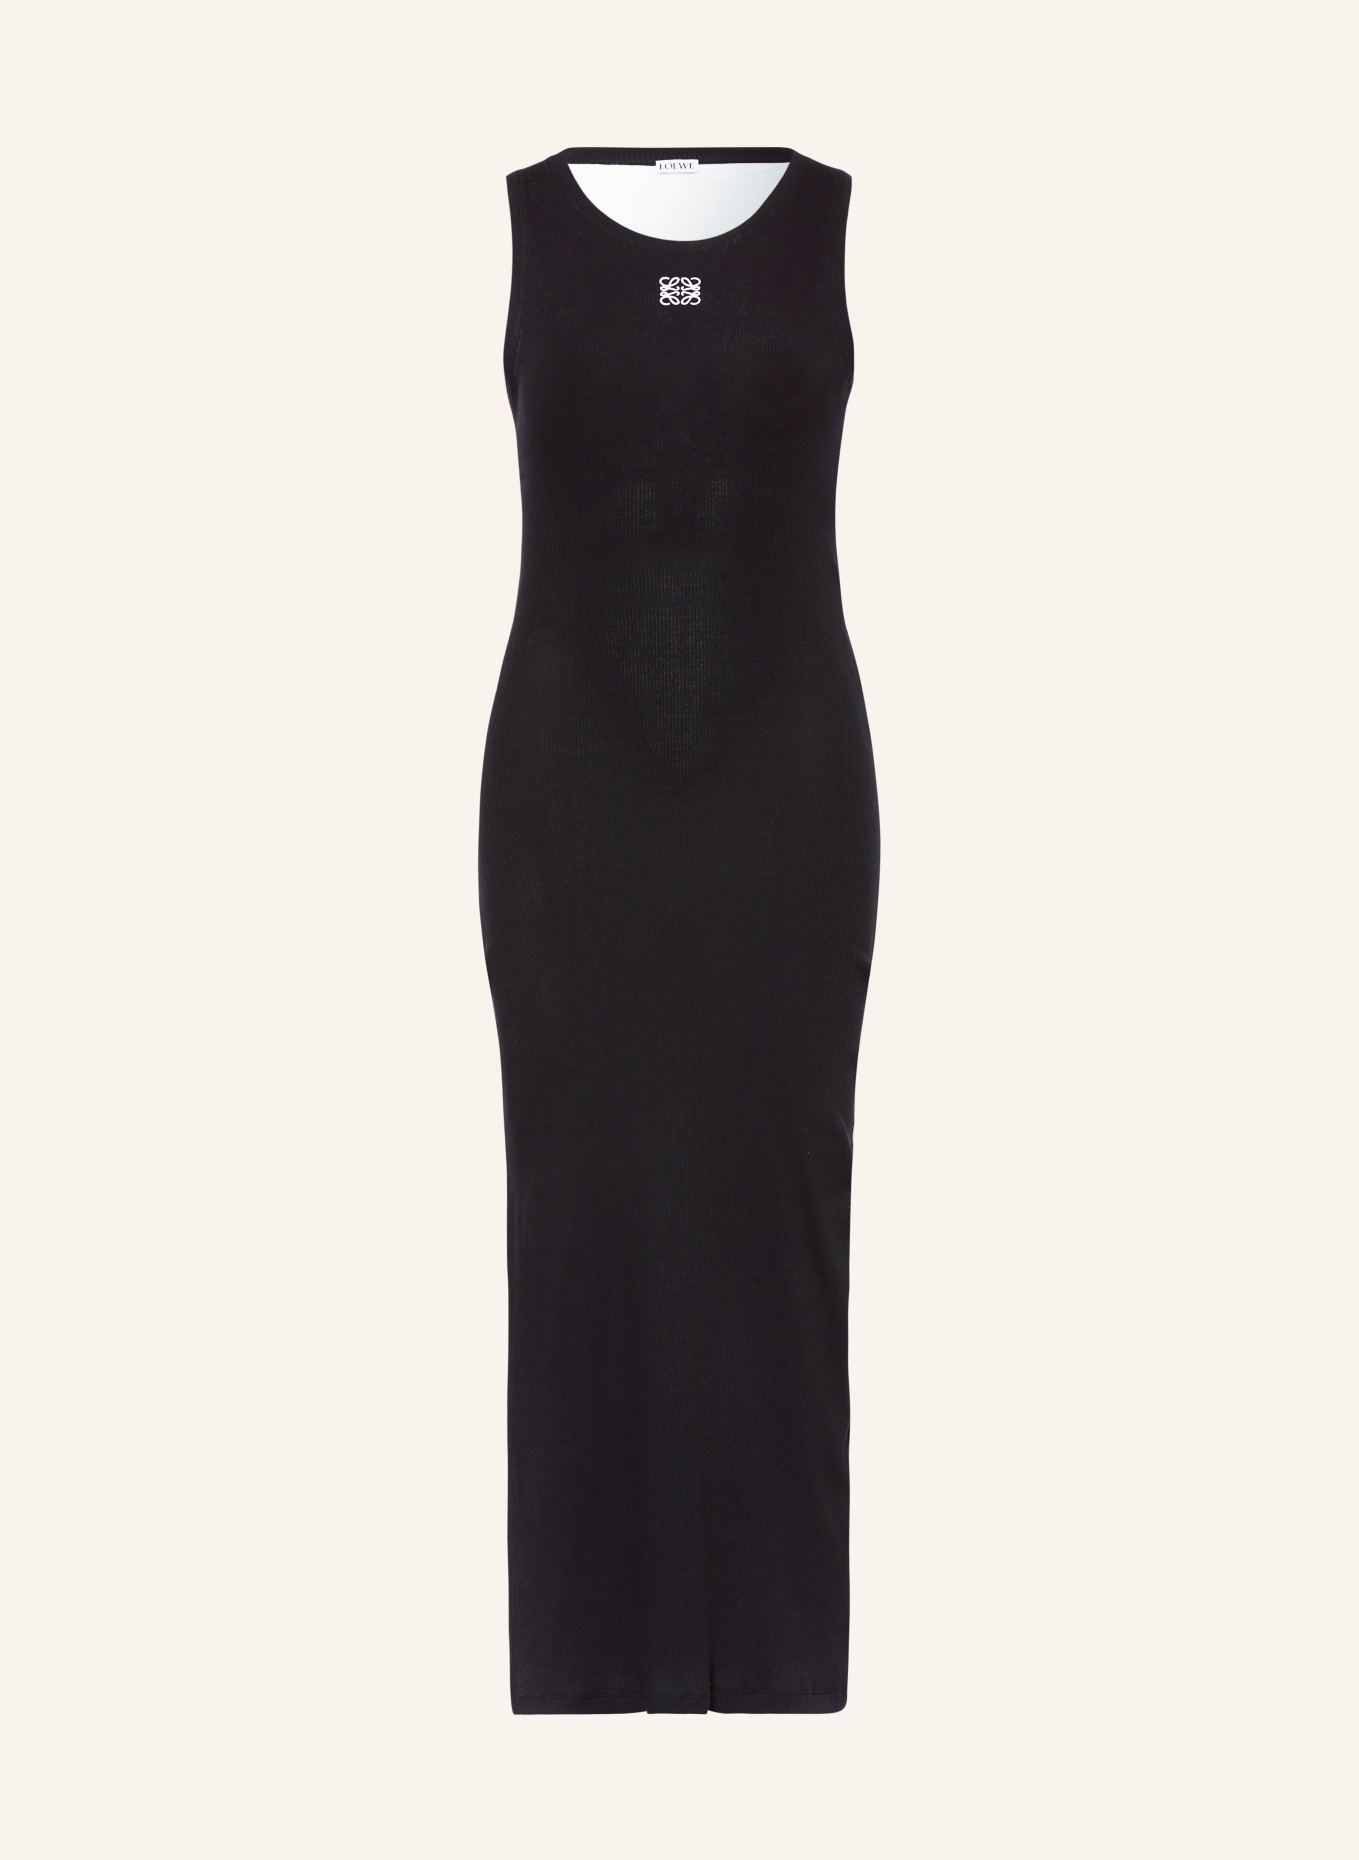 LOEWE Jerseykleid, Farbe: SCHWARZ (Bild 1)